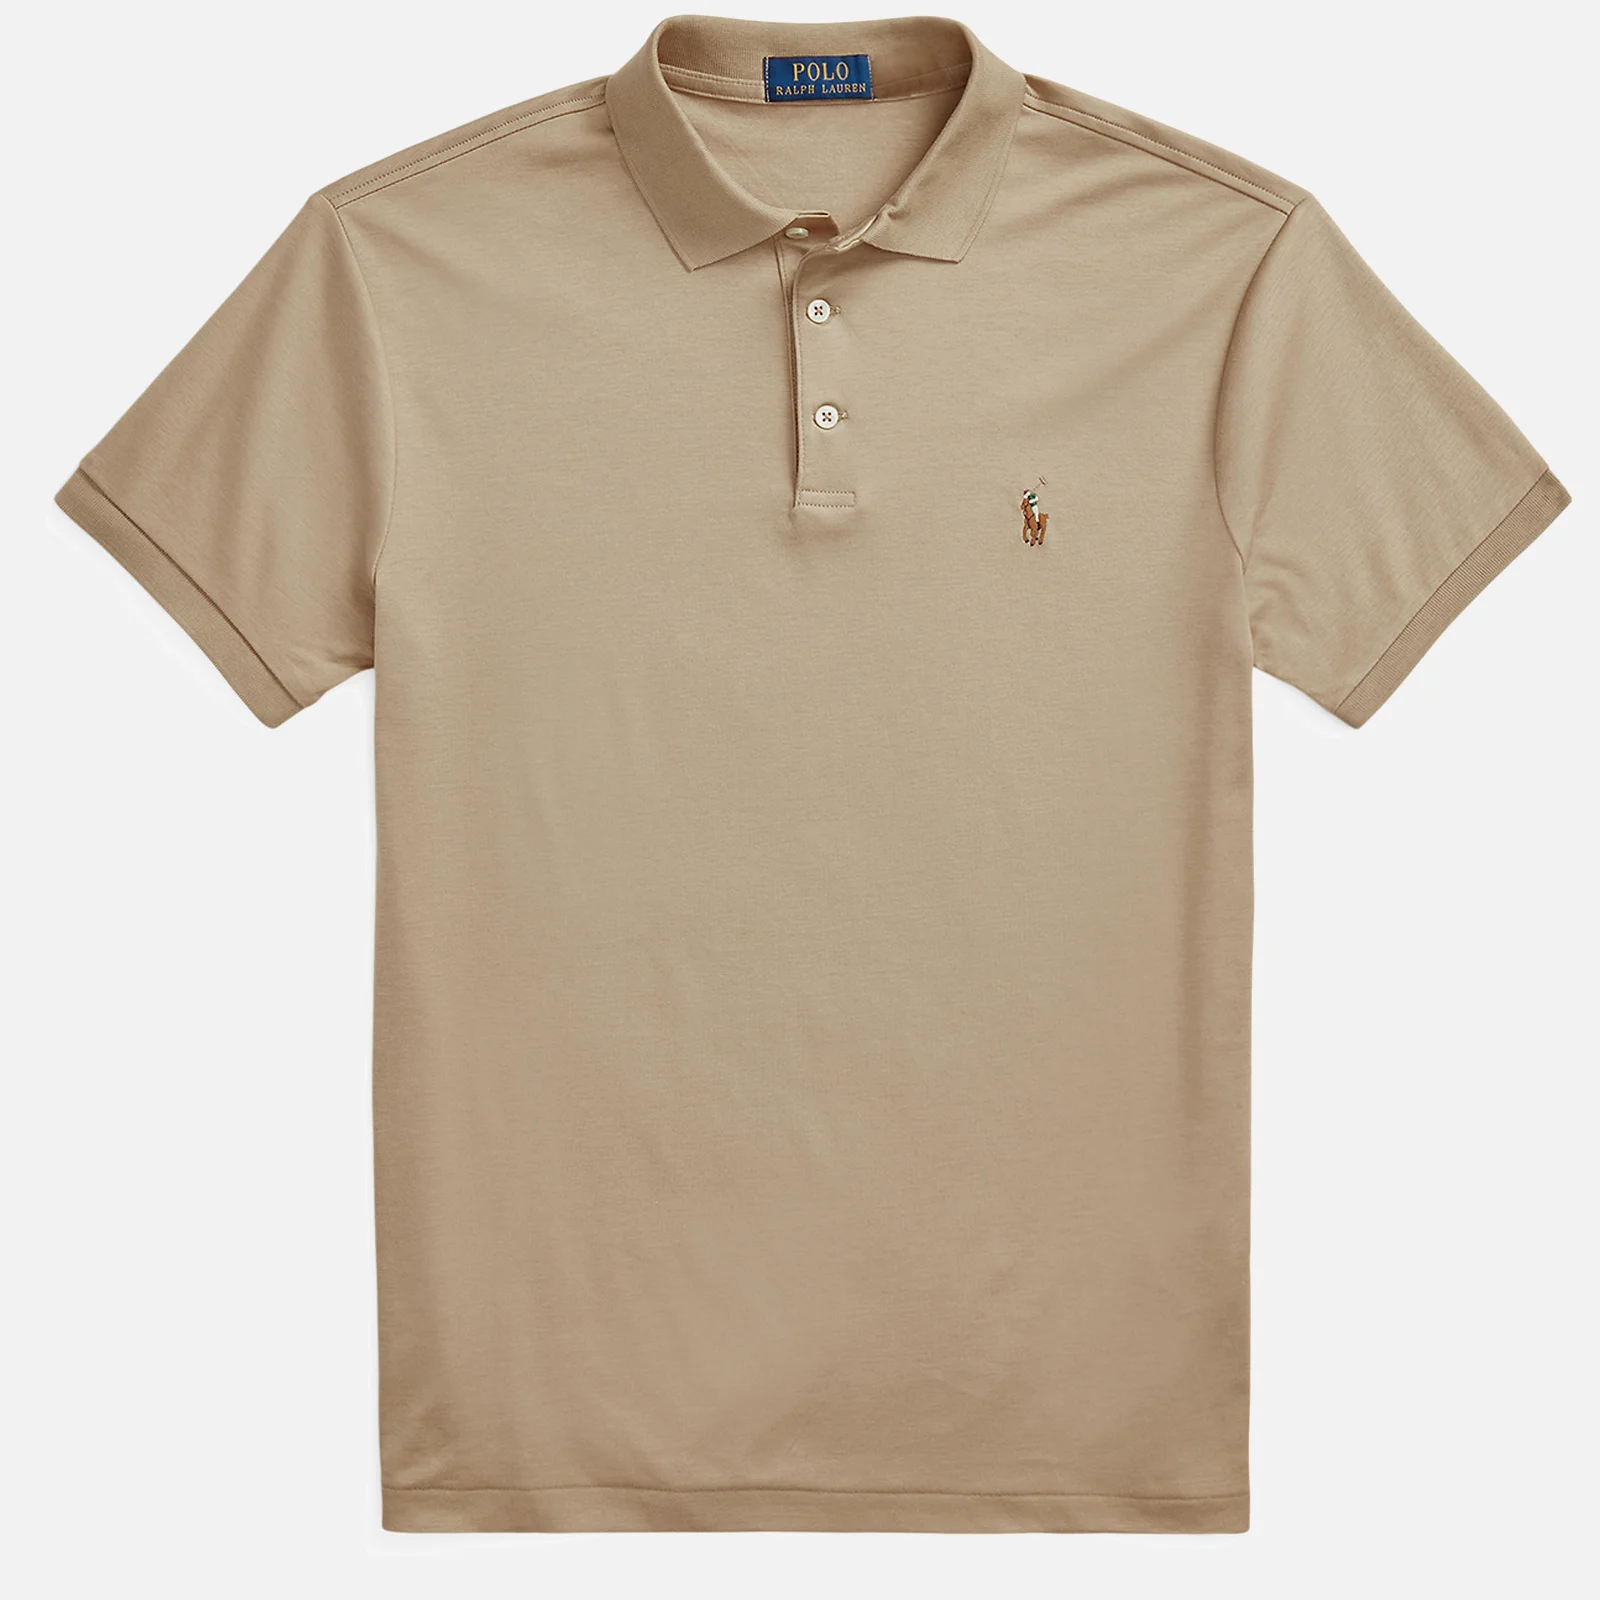 Polo Ralph Lauren Interlock Cotton Polo Shirt Image 1